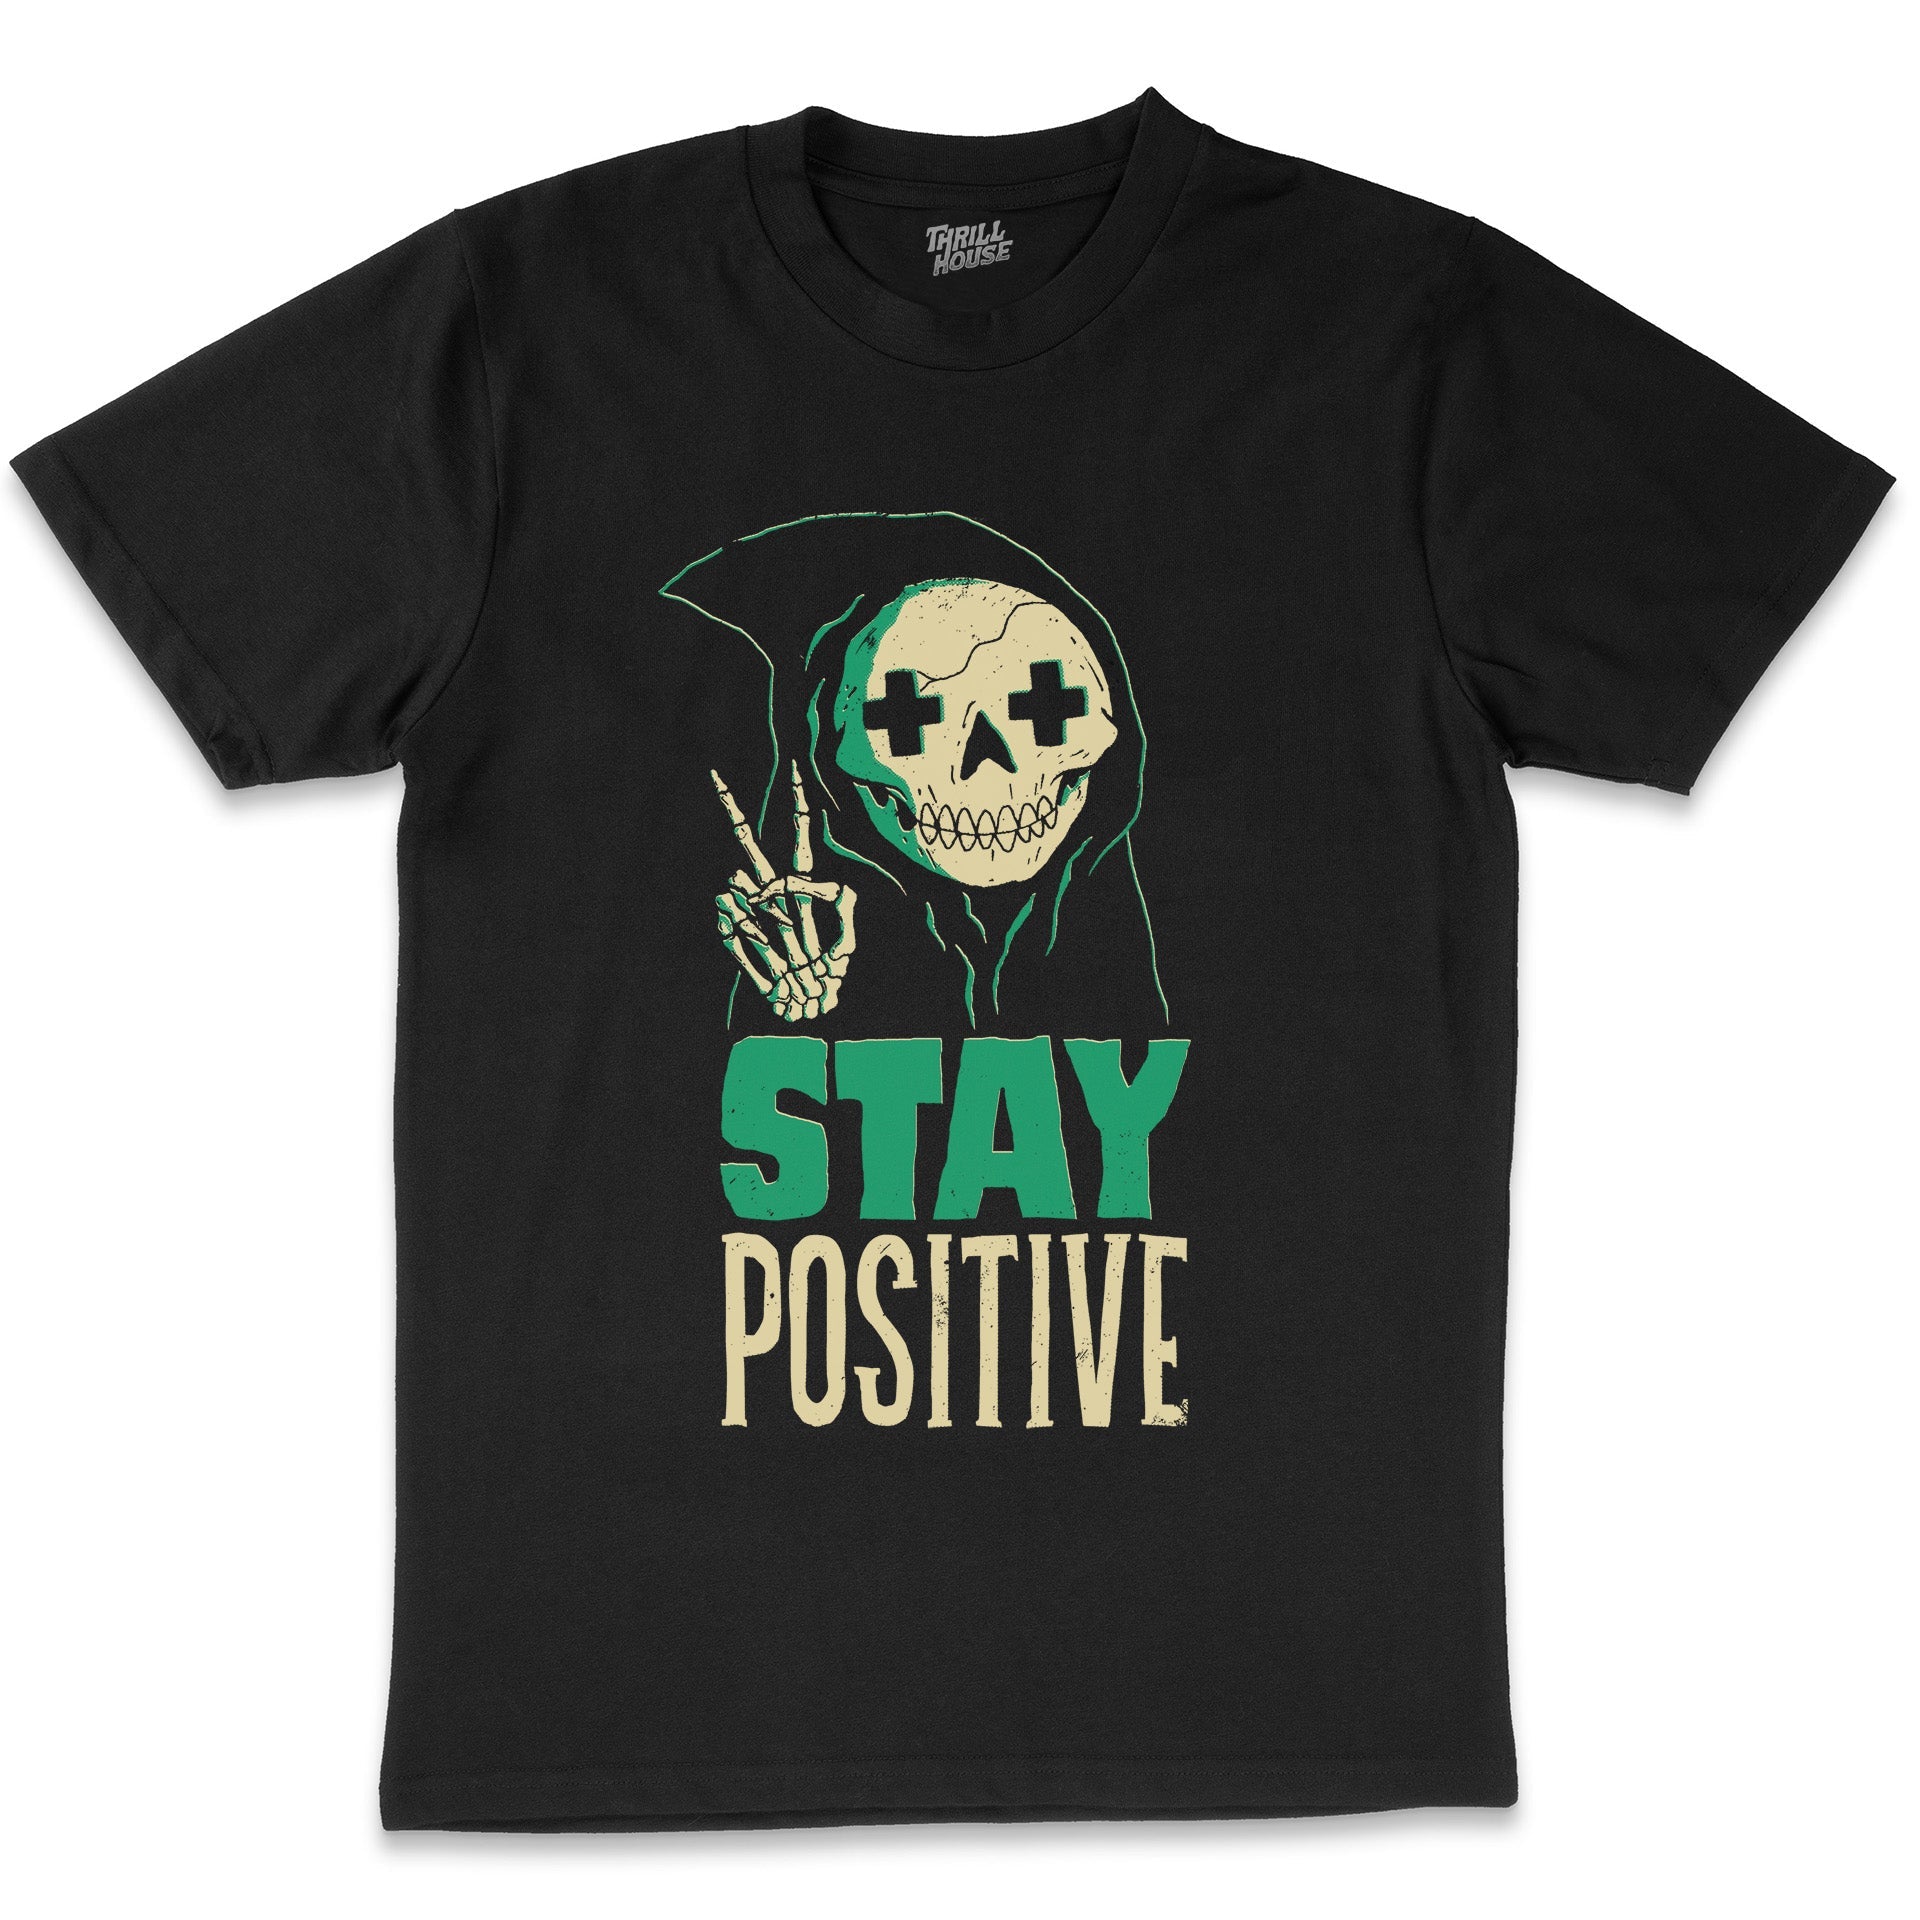 Stay Positive - Death Funny Grim Reaper Slogan Dark Humour Parody Mental Health Cotton T-Shirt